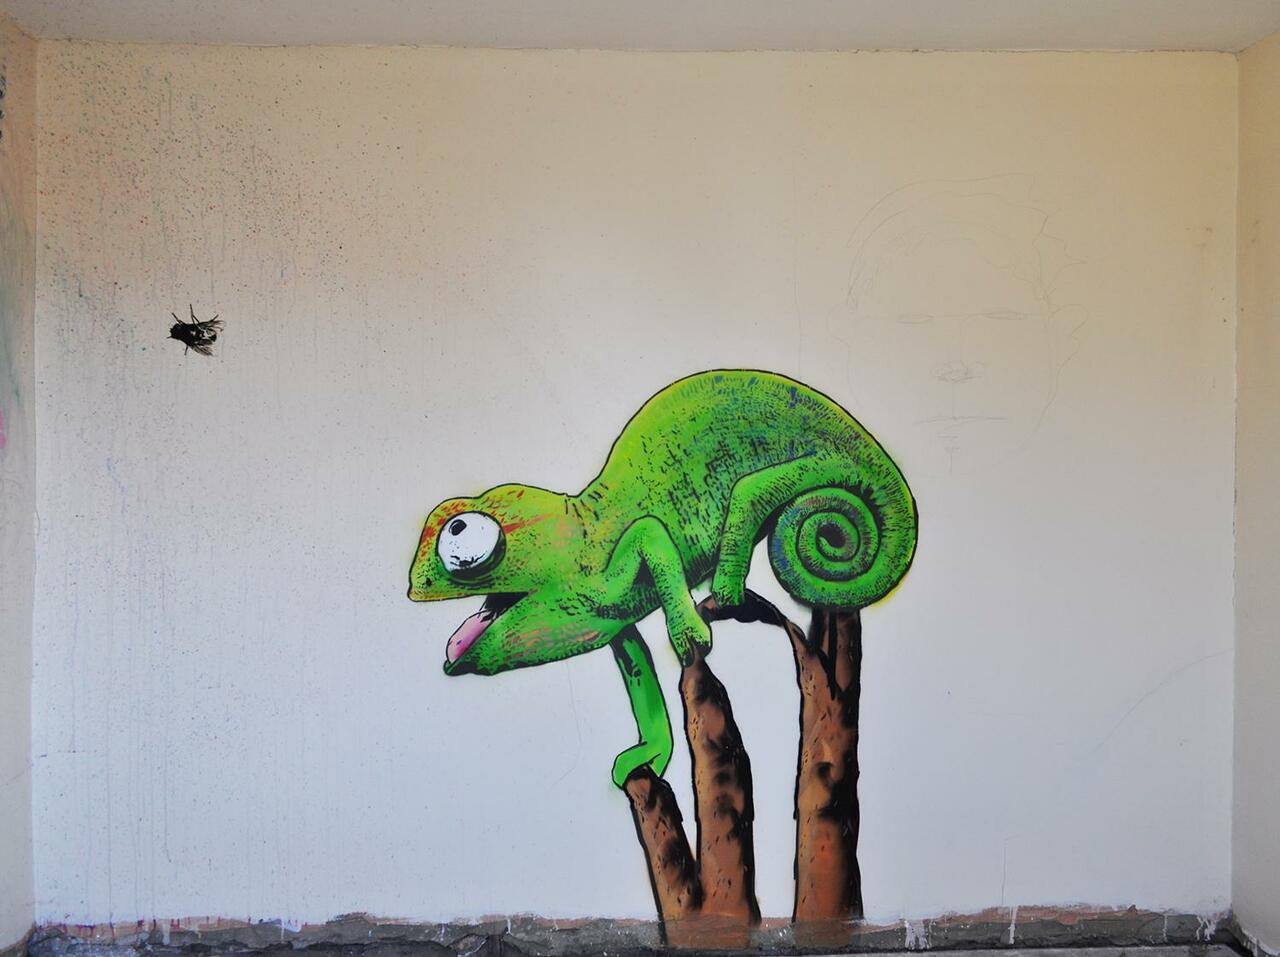 Now you see me... #graffiti #chameleon #streetart #urbanart #london #stencil #uk #colossalartdwarves http://t.co/duWuS9psUz